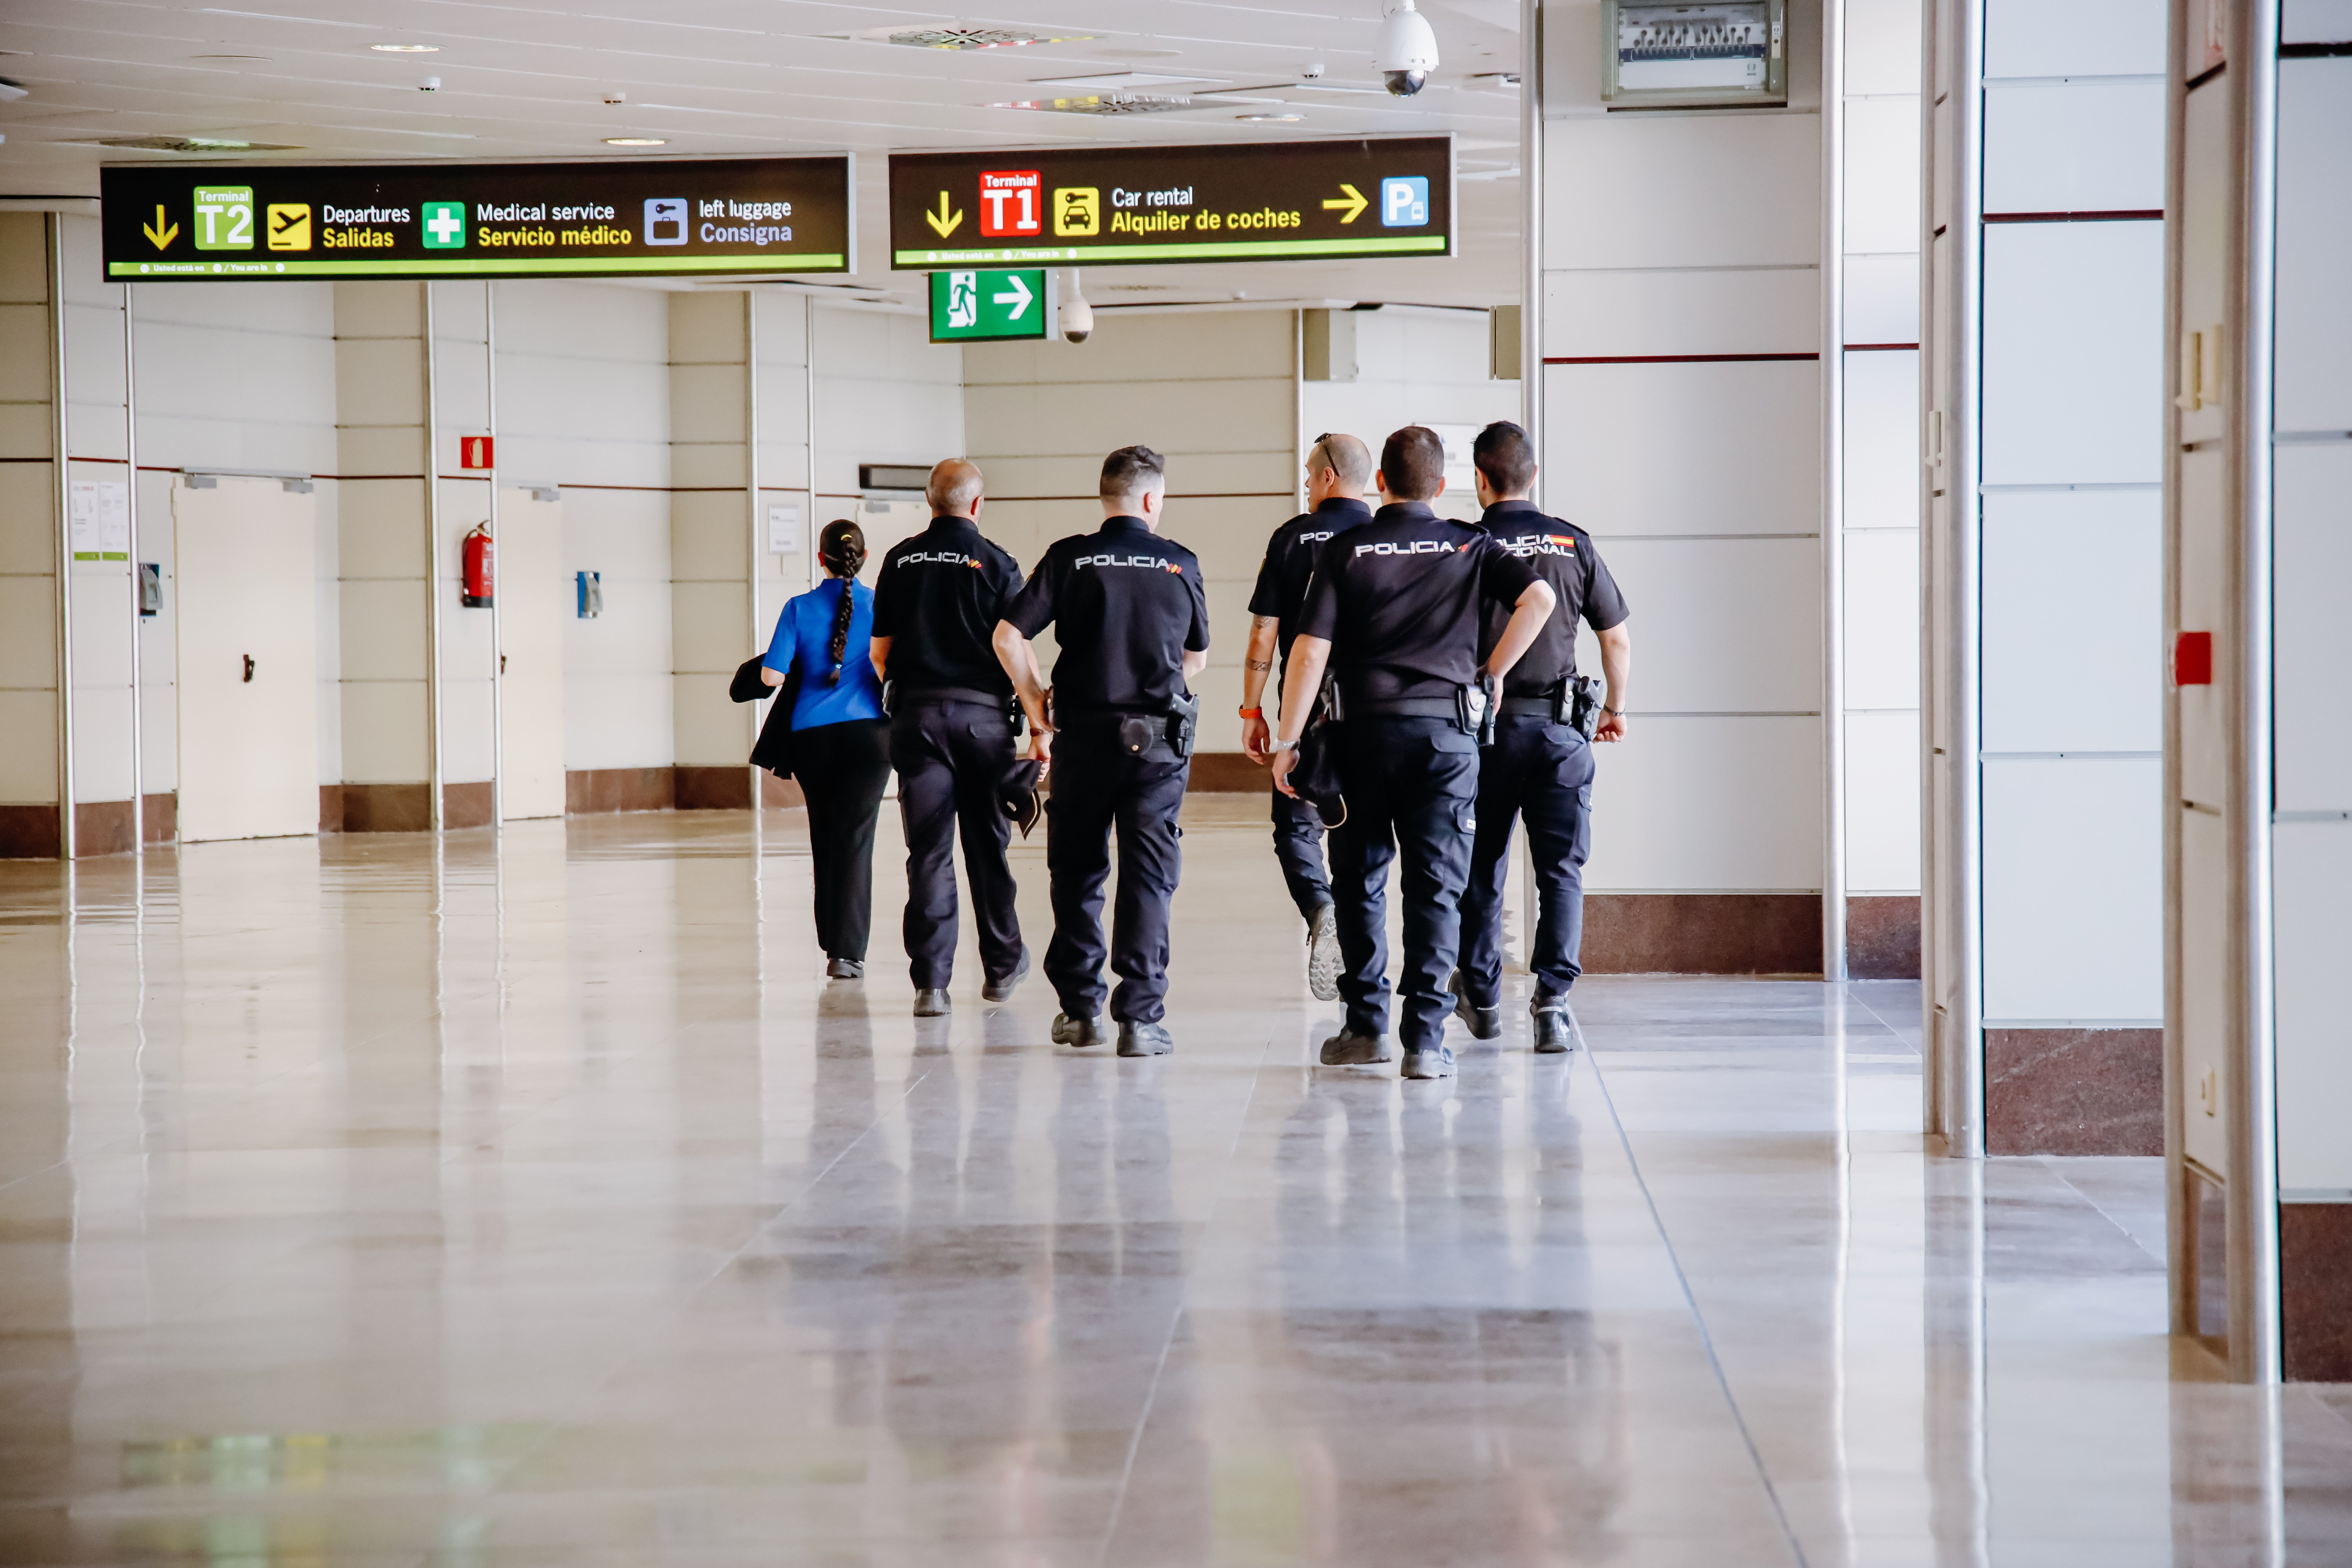 Policia Nacional aeroport Barajas Madrid / Europa Press